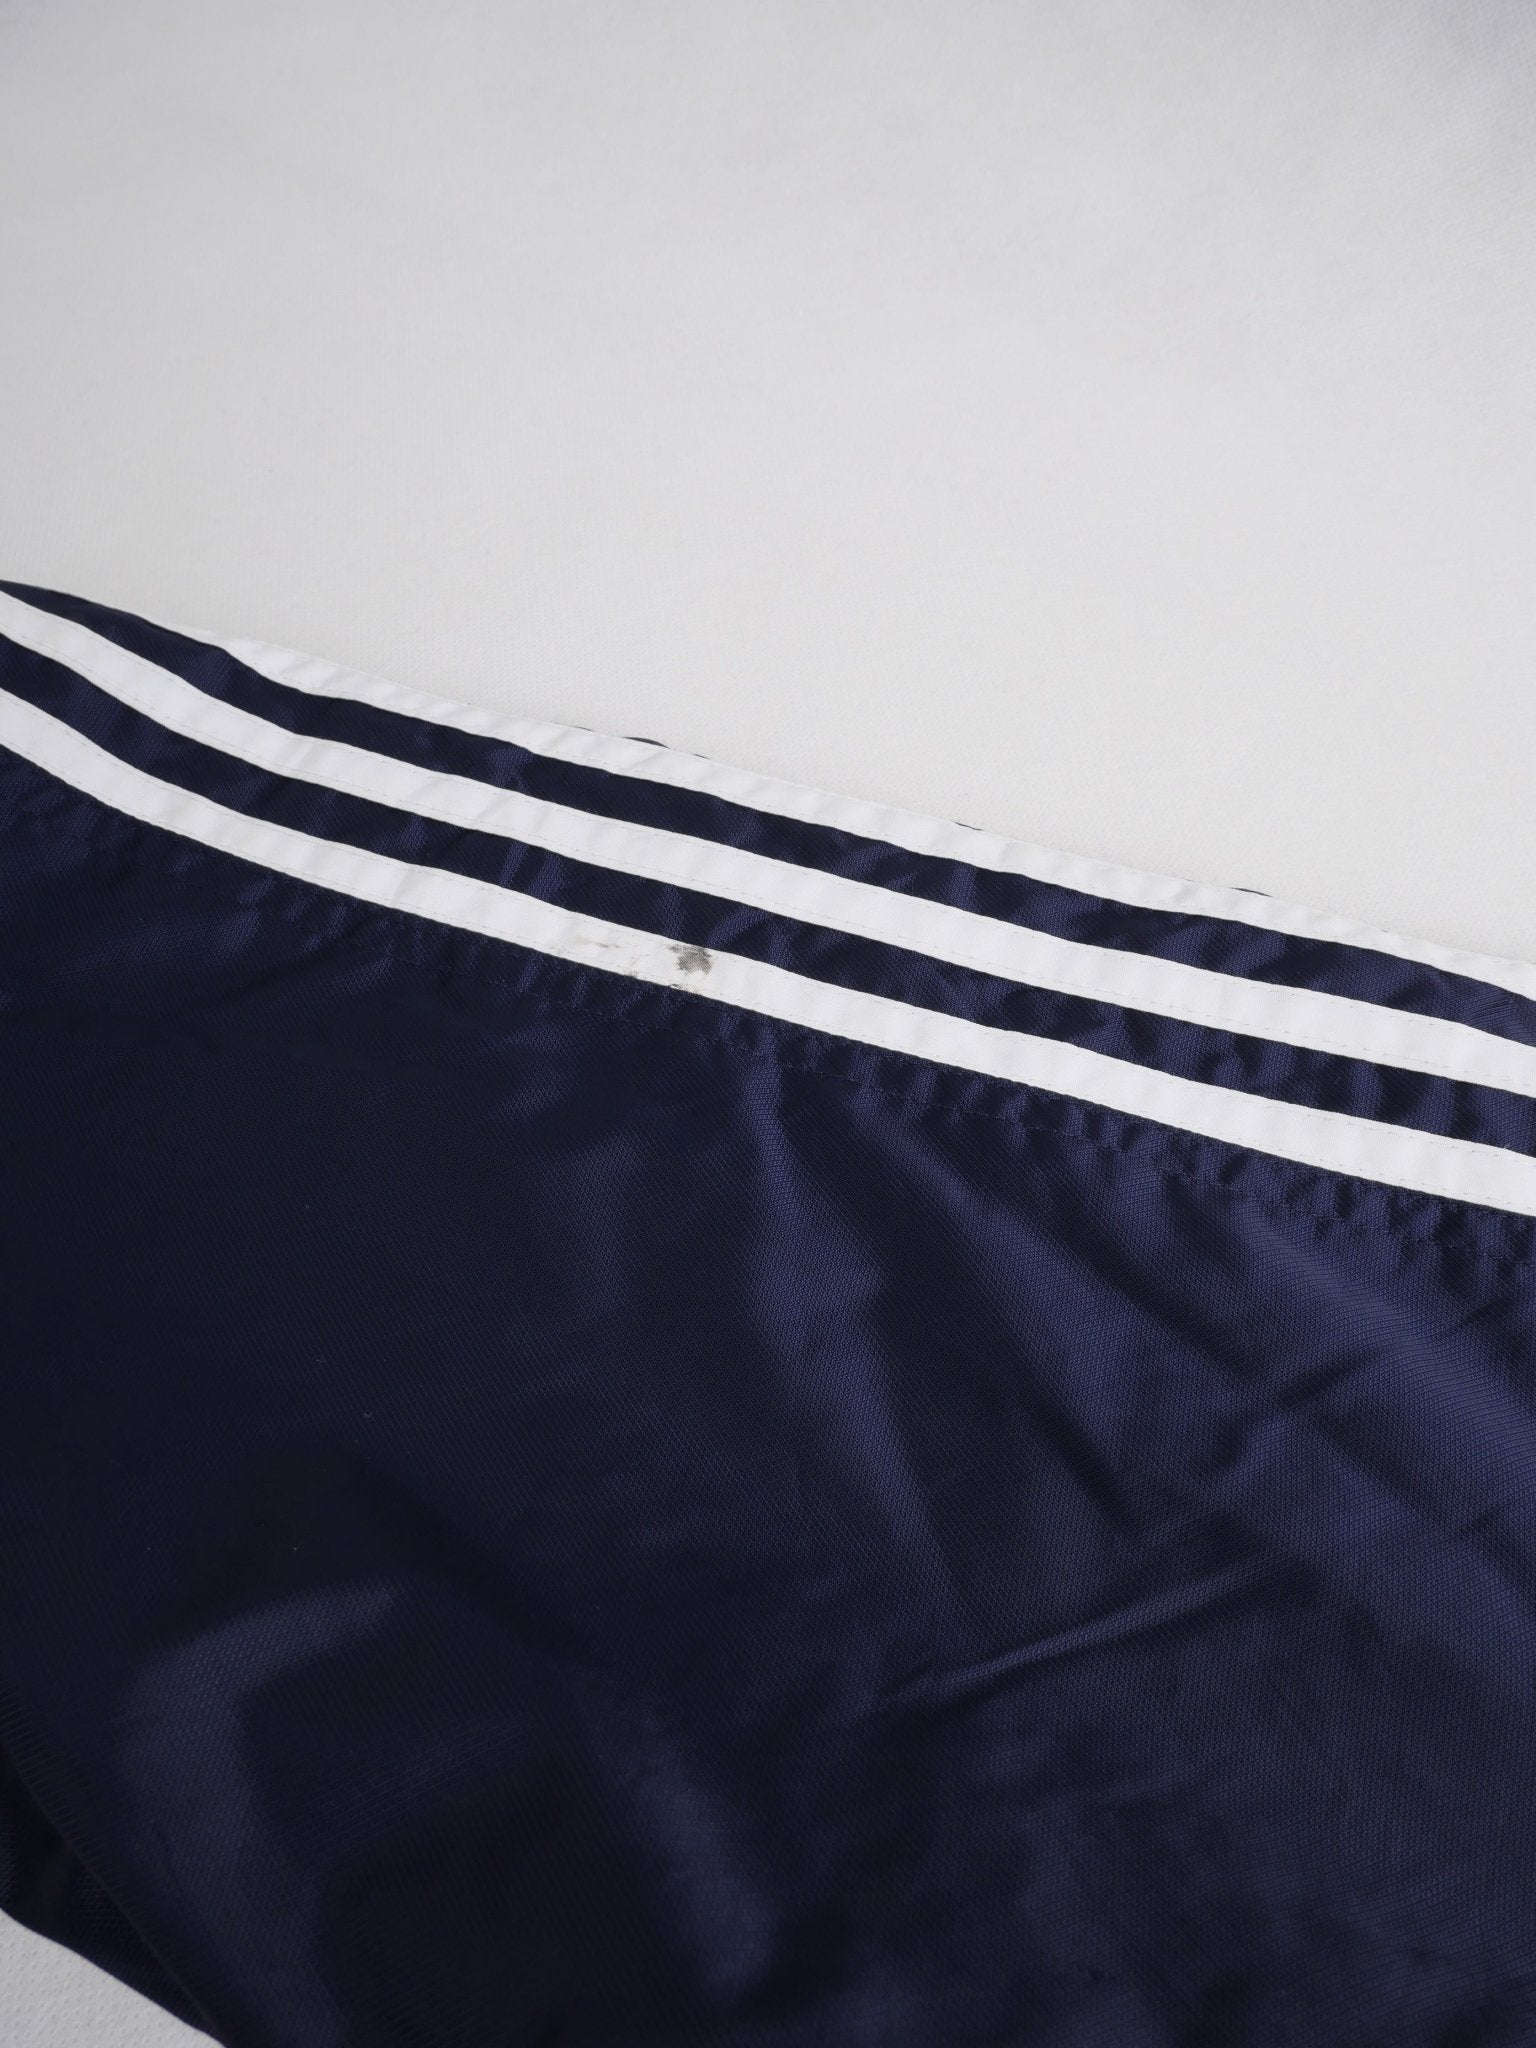 Adidas embroidered Logo reversible Vintage heavy Jacket - Peeces